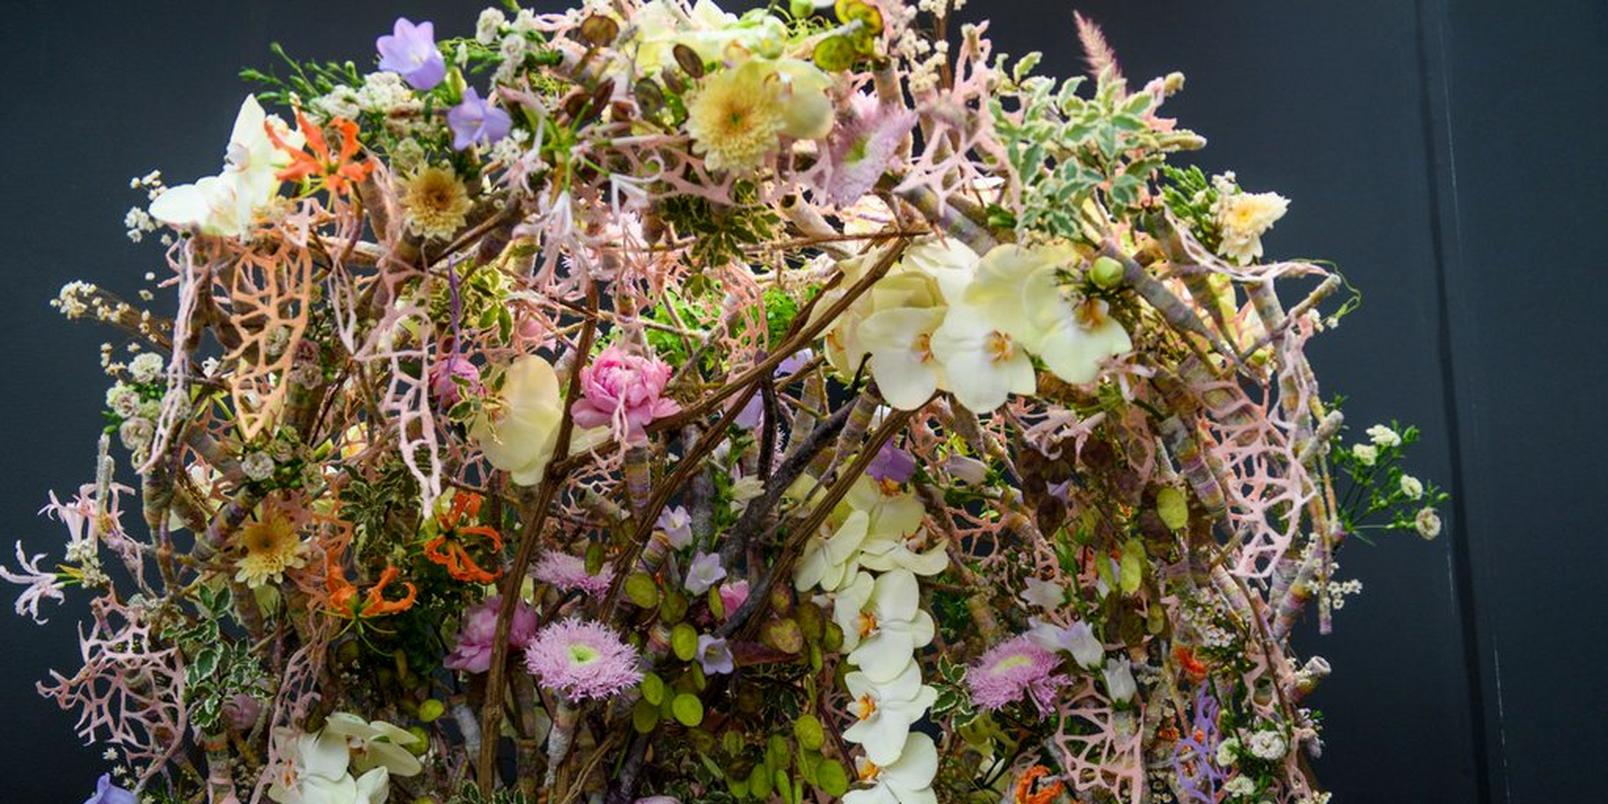 laura-leong-crowned-interflora-florist-year-2018-5